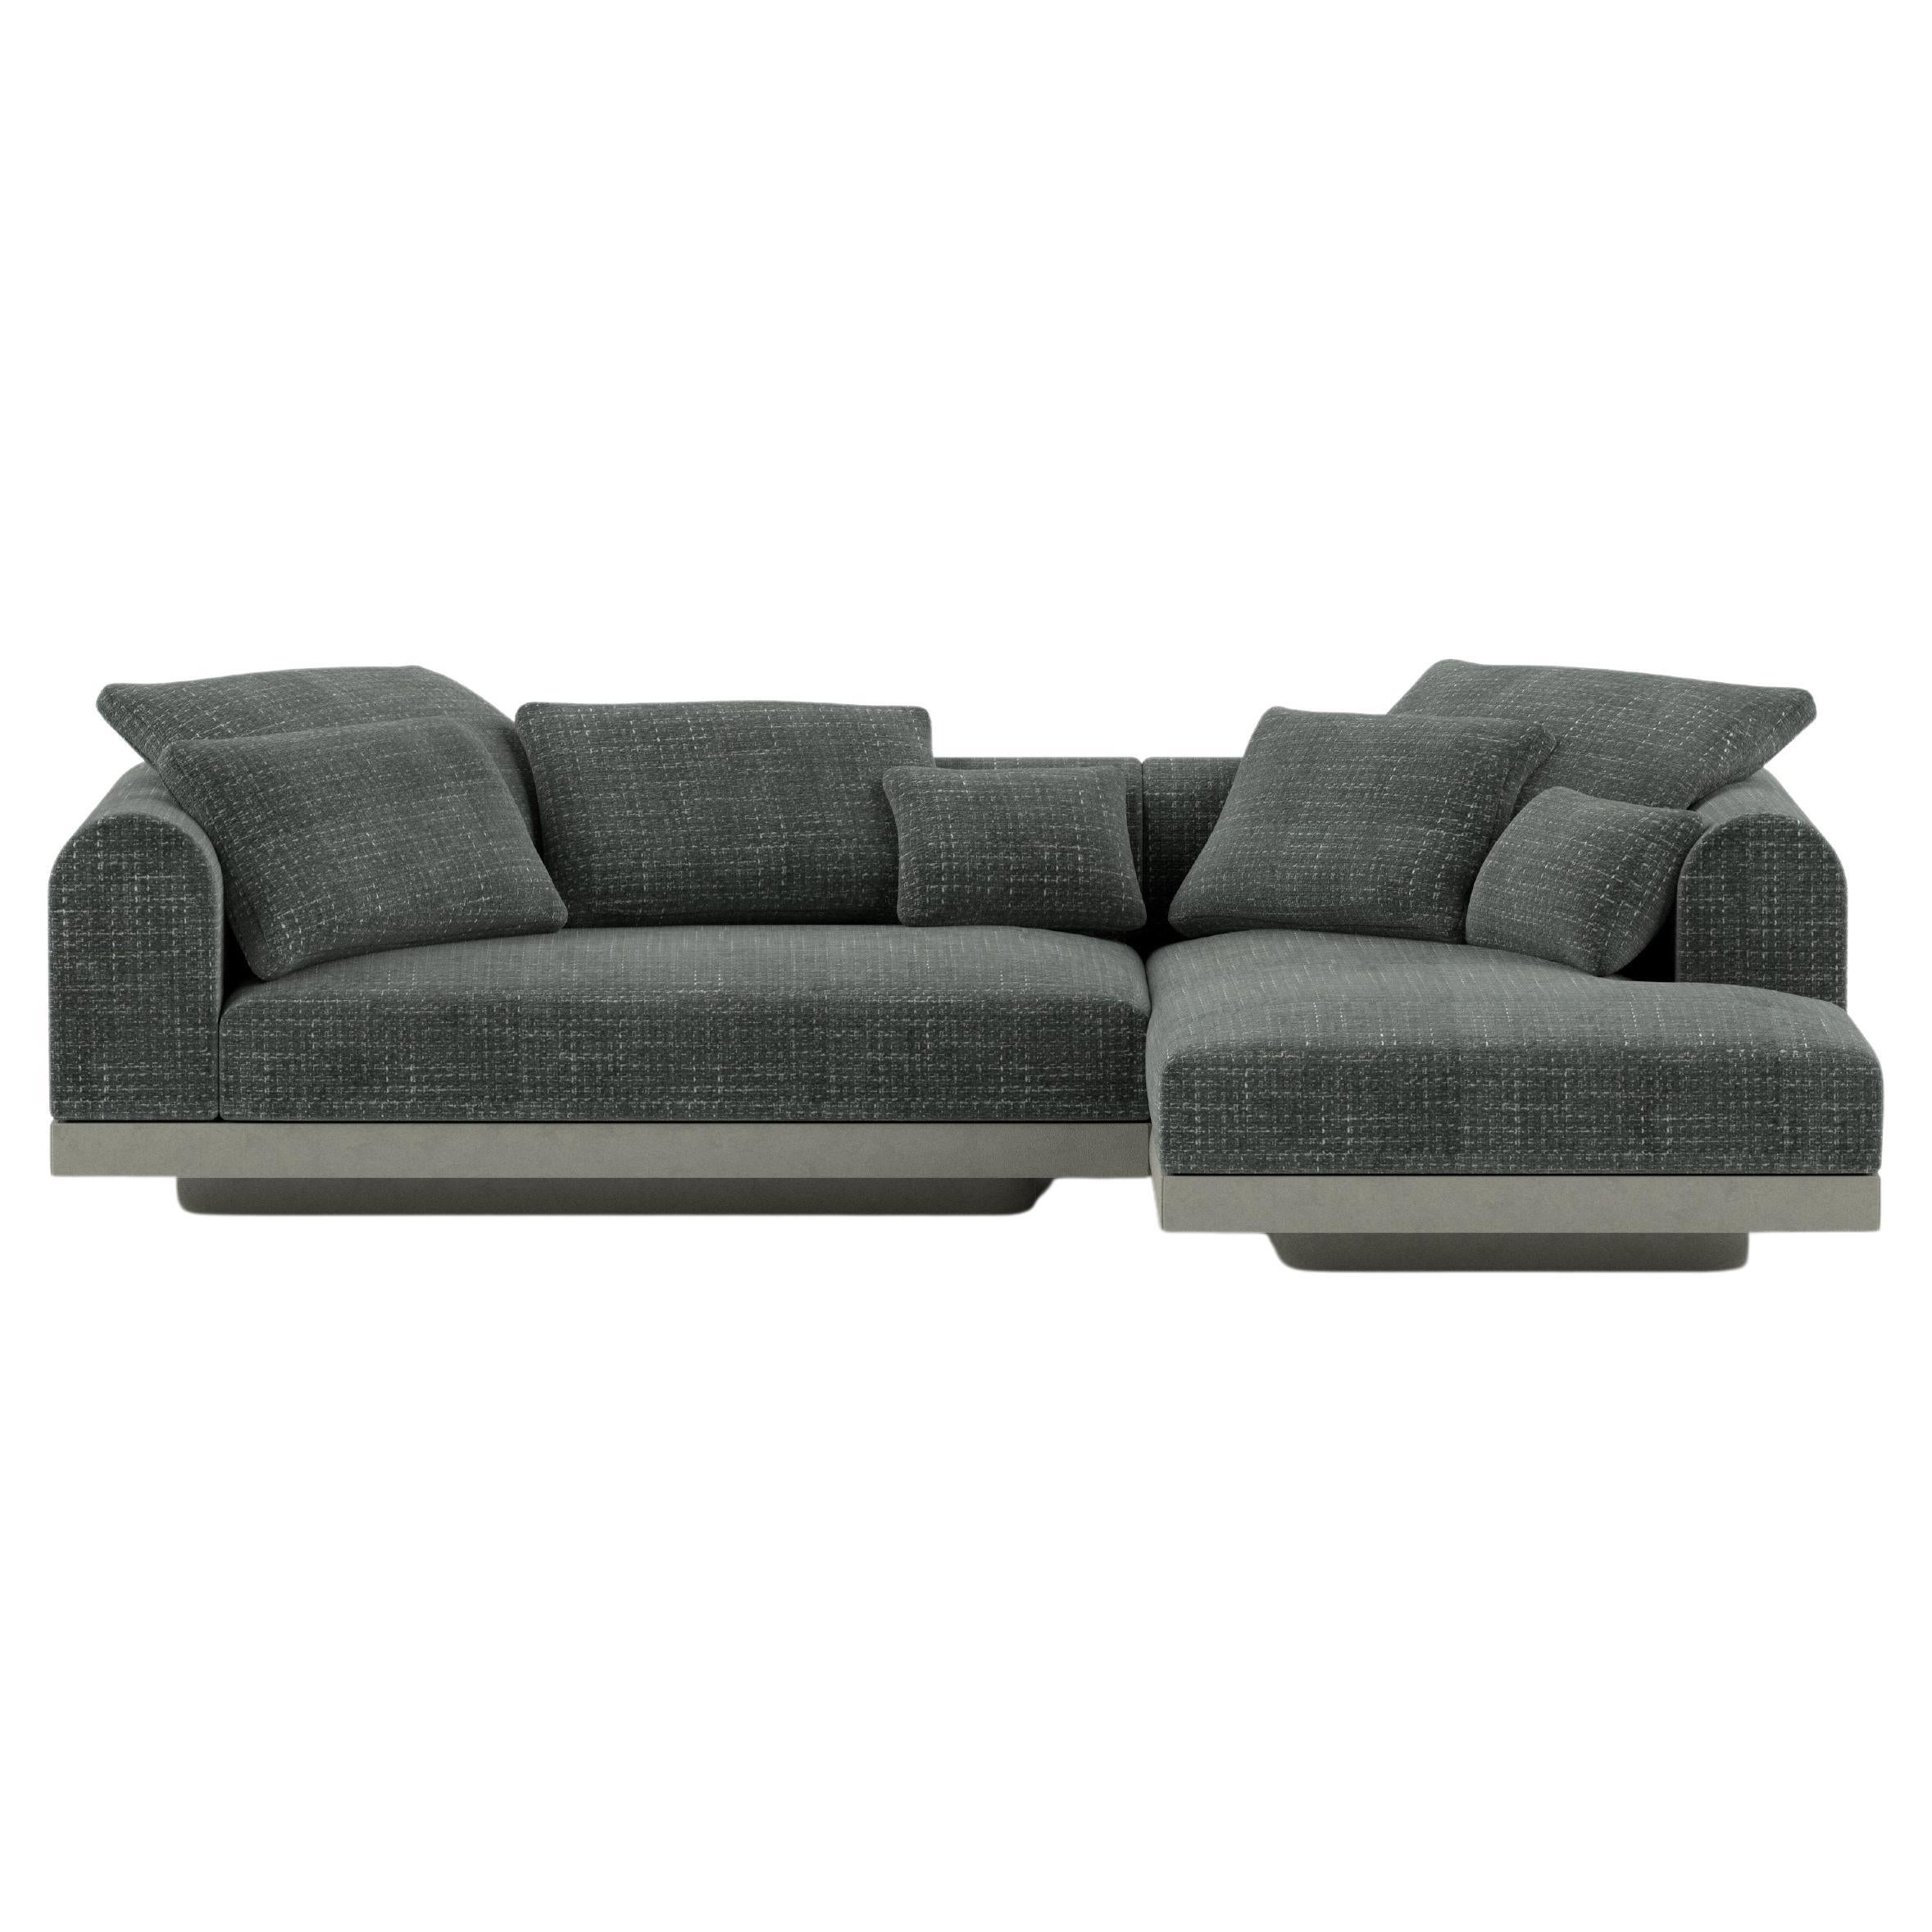 Aqueduct' Contemporary Sofa von Poiat, Setup 1, Yang 95, High Plinth im Angebot